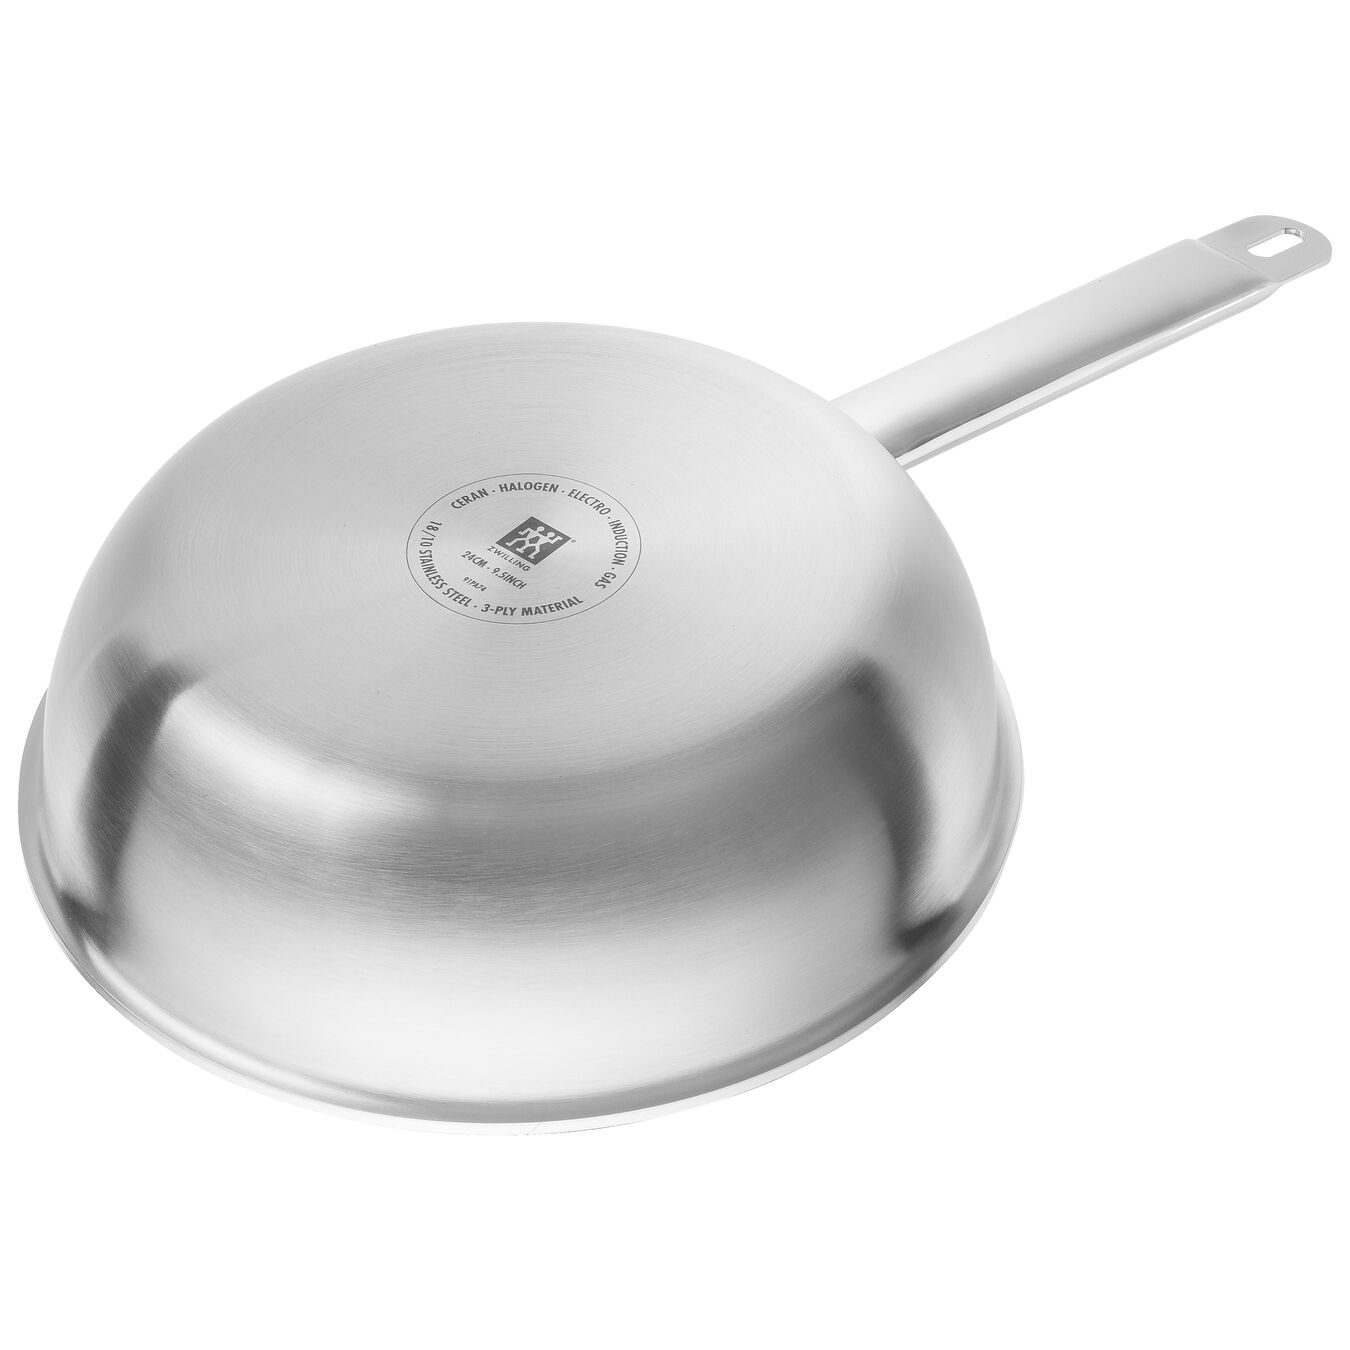 20 cm 18/10 Stainless Steel Frying pan silver-black,,large 3